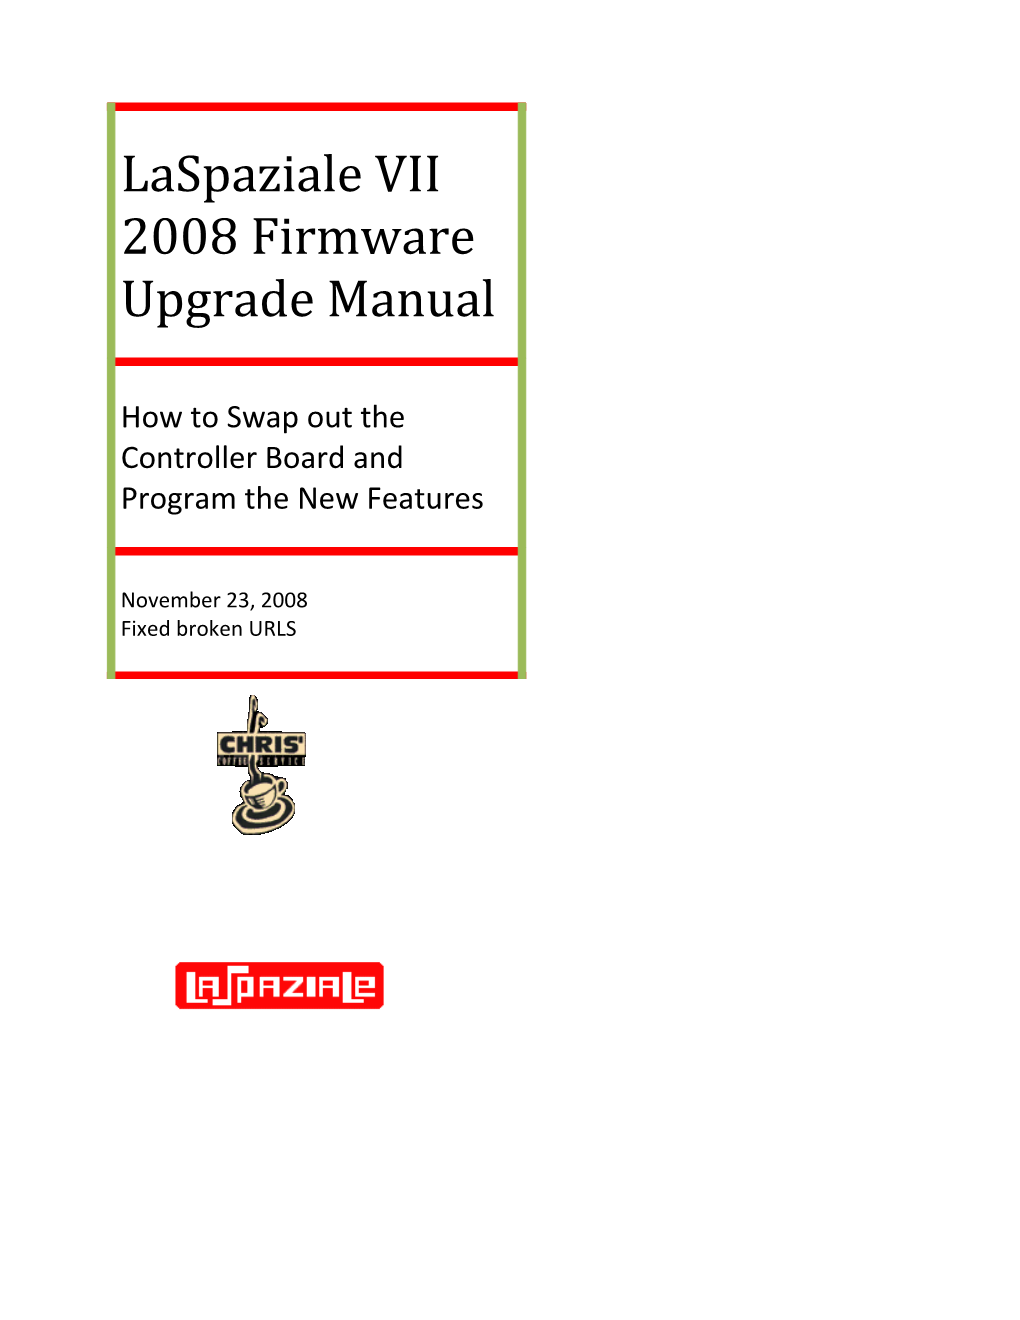 Laspaziale VII 2008 Firmware Upgrade Manual